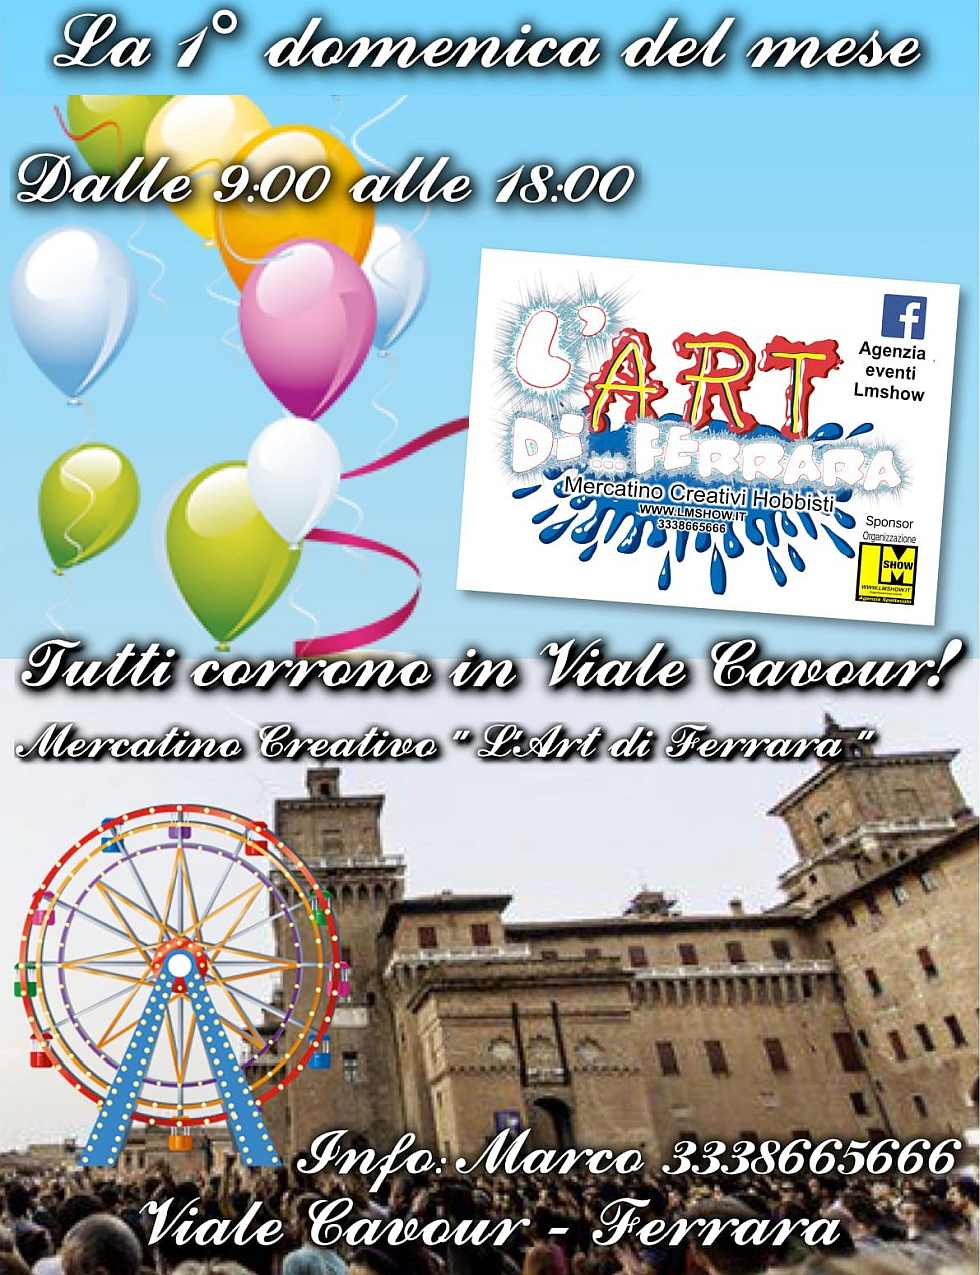 Ferrara
"Mercatino Creativo L'Art di Ferrara" 
1^ Domenica del mese
